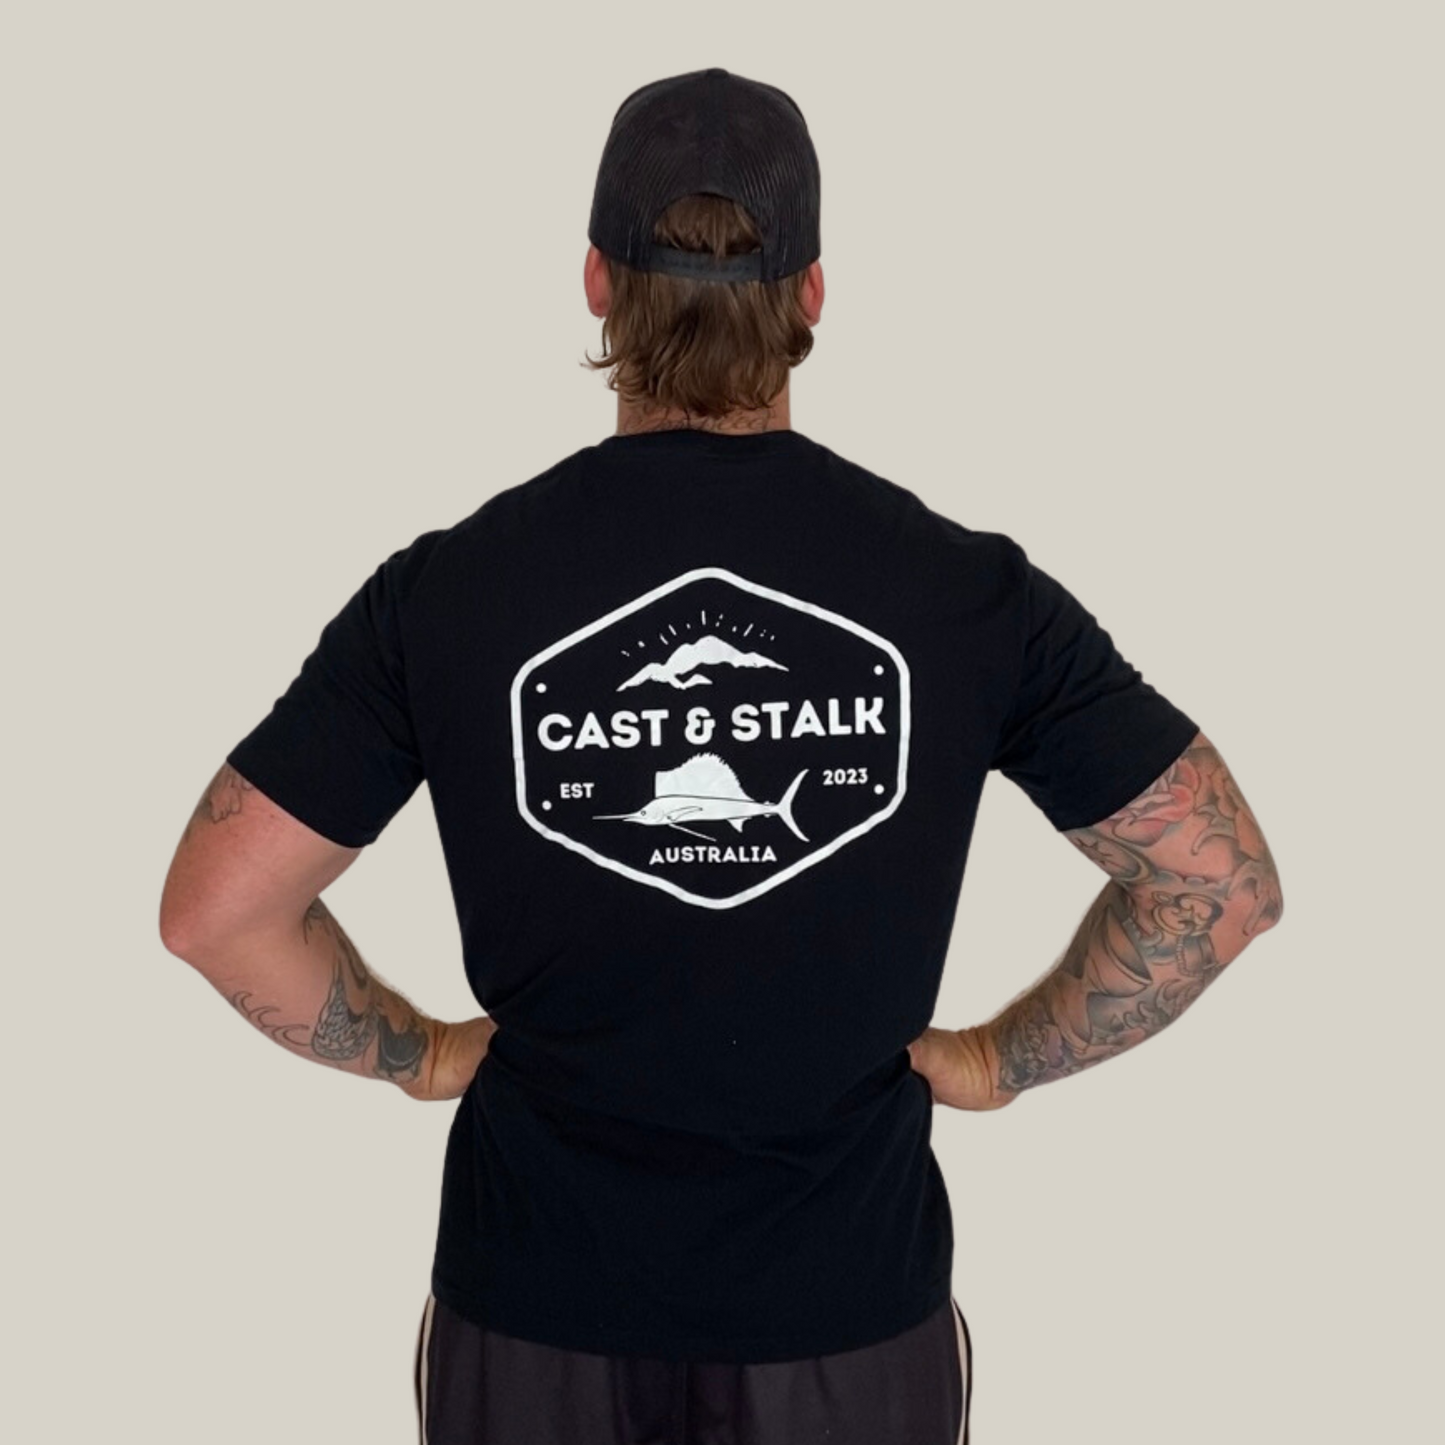 Cast and stalk t-shirt black